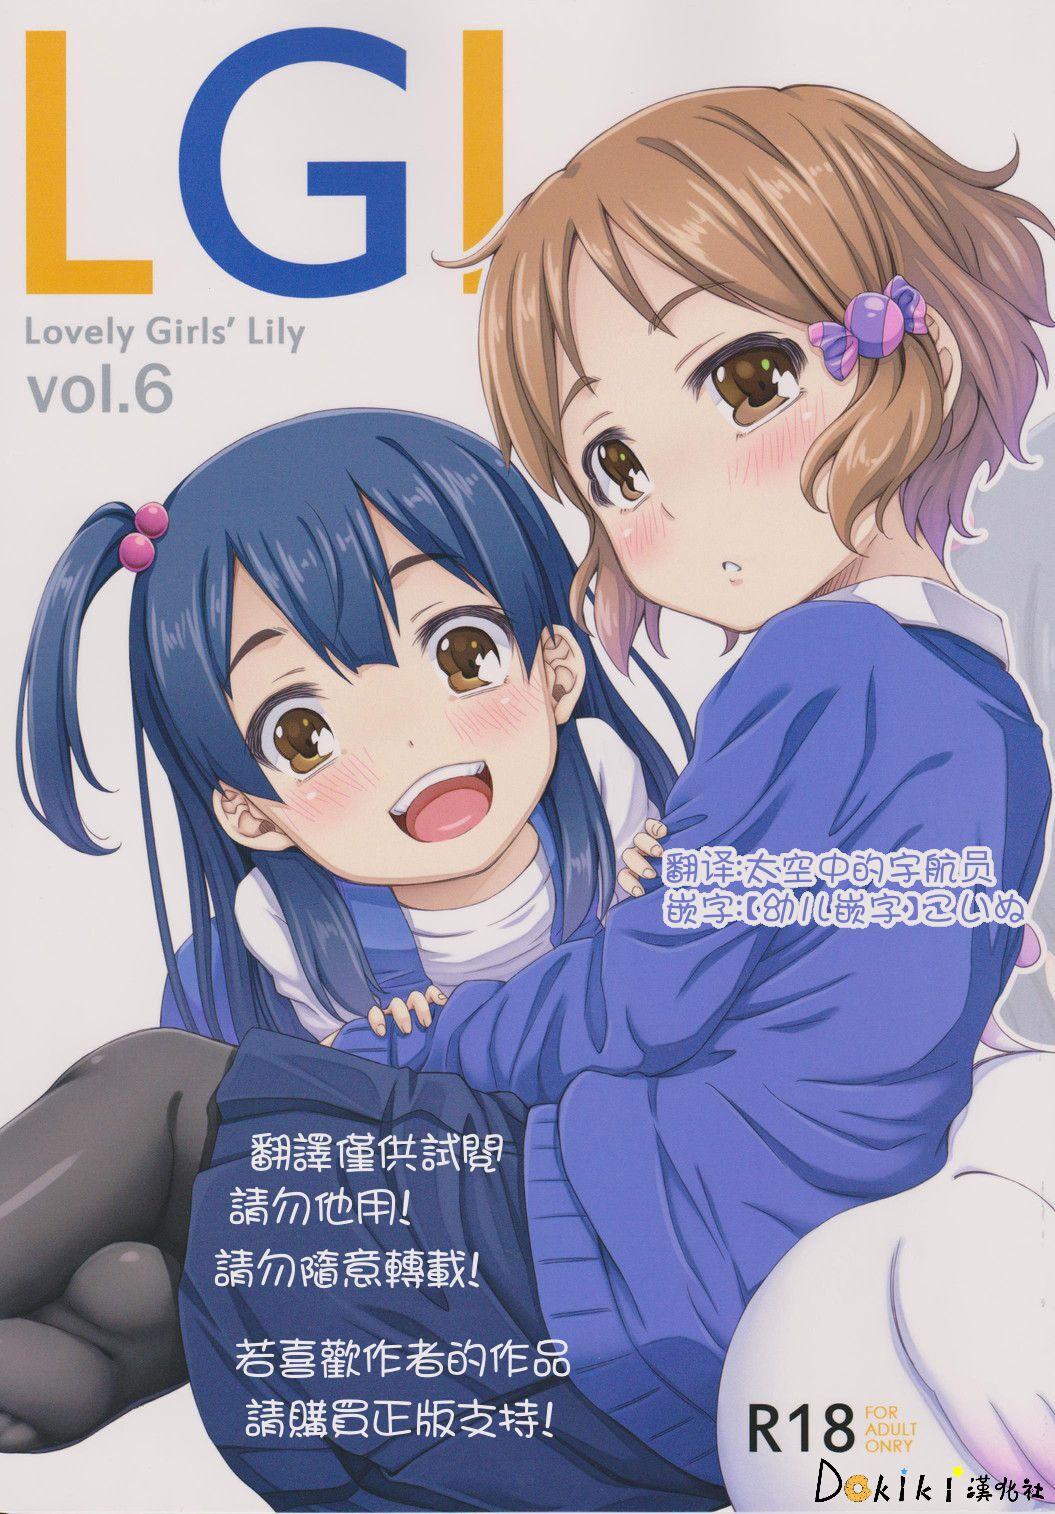 Lovely Girls' Lily vol. 6 1